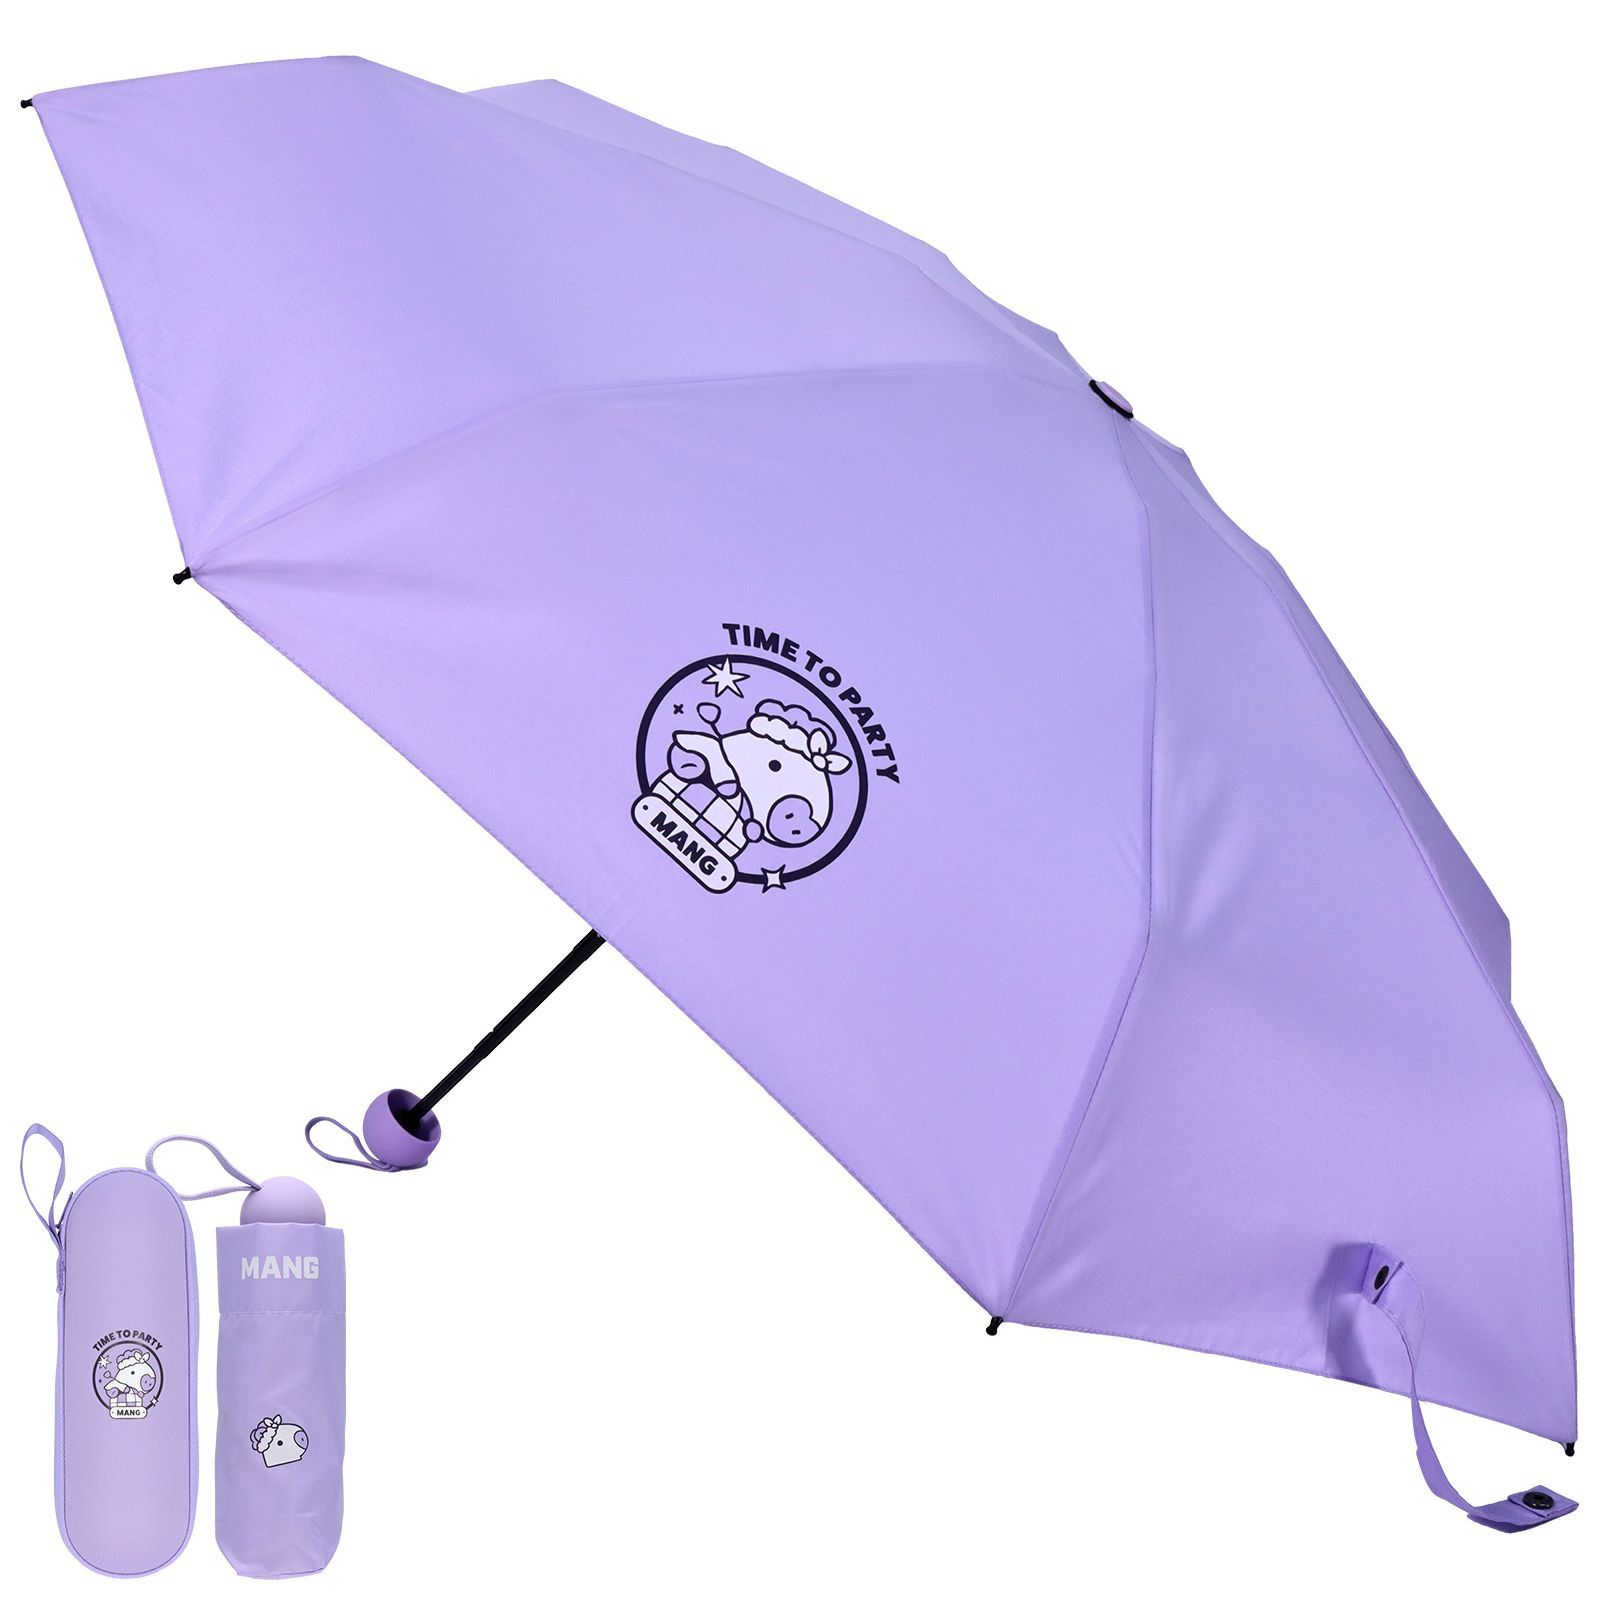 BT21 公式 グッズ 折り畳み傘 MANG マン 紫 キャラクター デザイン 